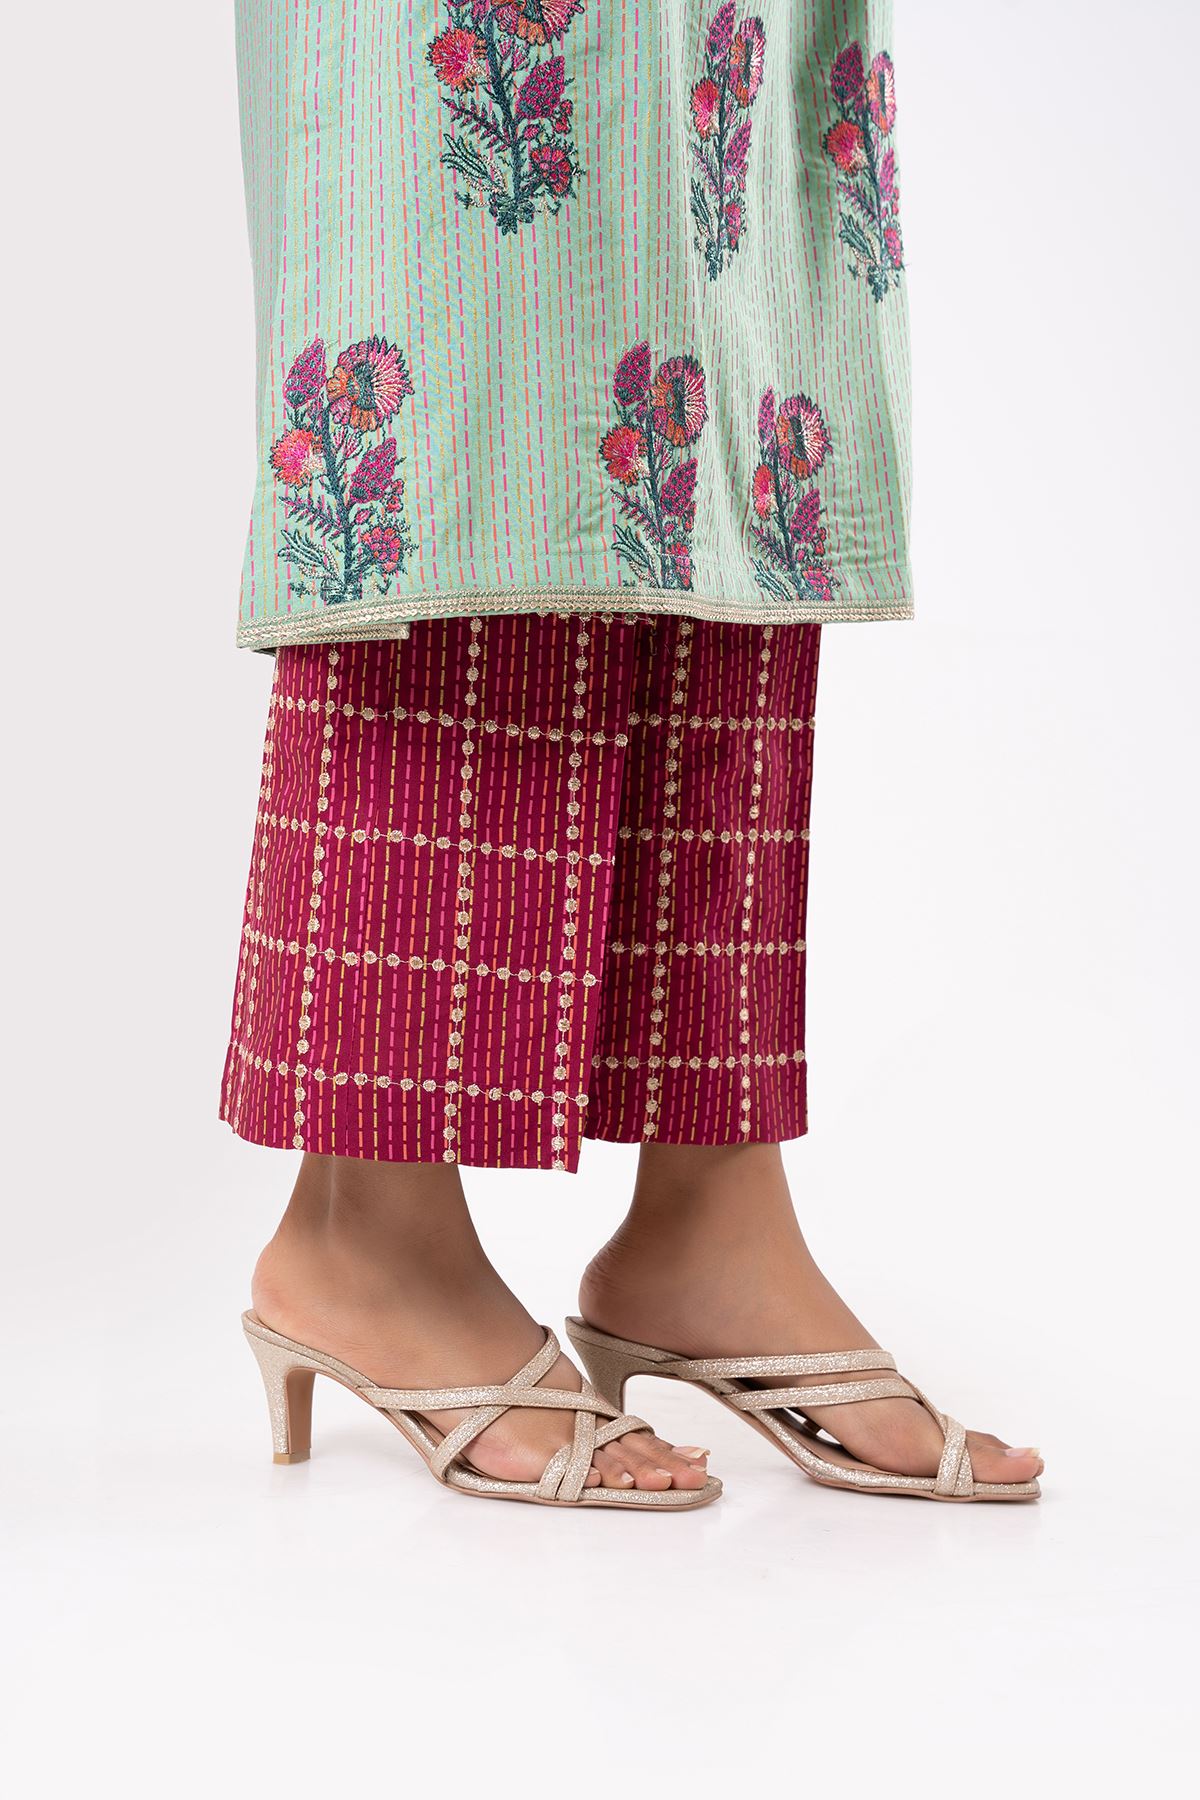 Buy EPILOG Bottom Dyeable Khadi Trouser Pant for Girls & Women | Organic  Fabric | Khadi Look | 100% Cotton | Pant Palazzo | Natural Color-XXX-Large  at Amazon.in